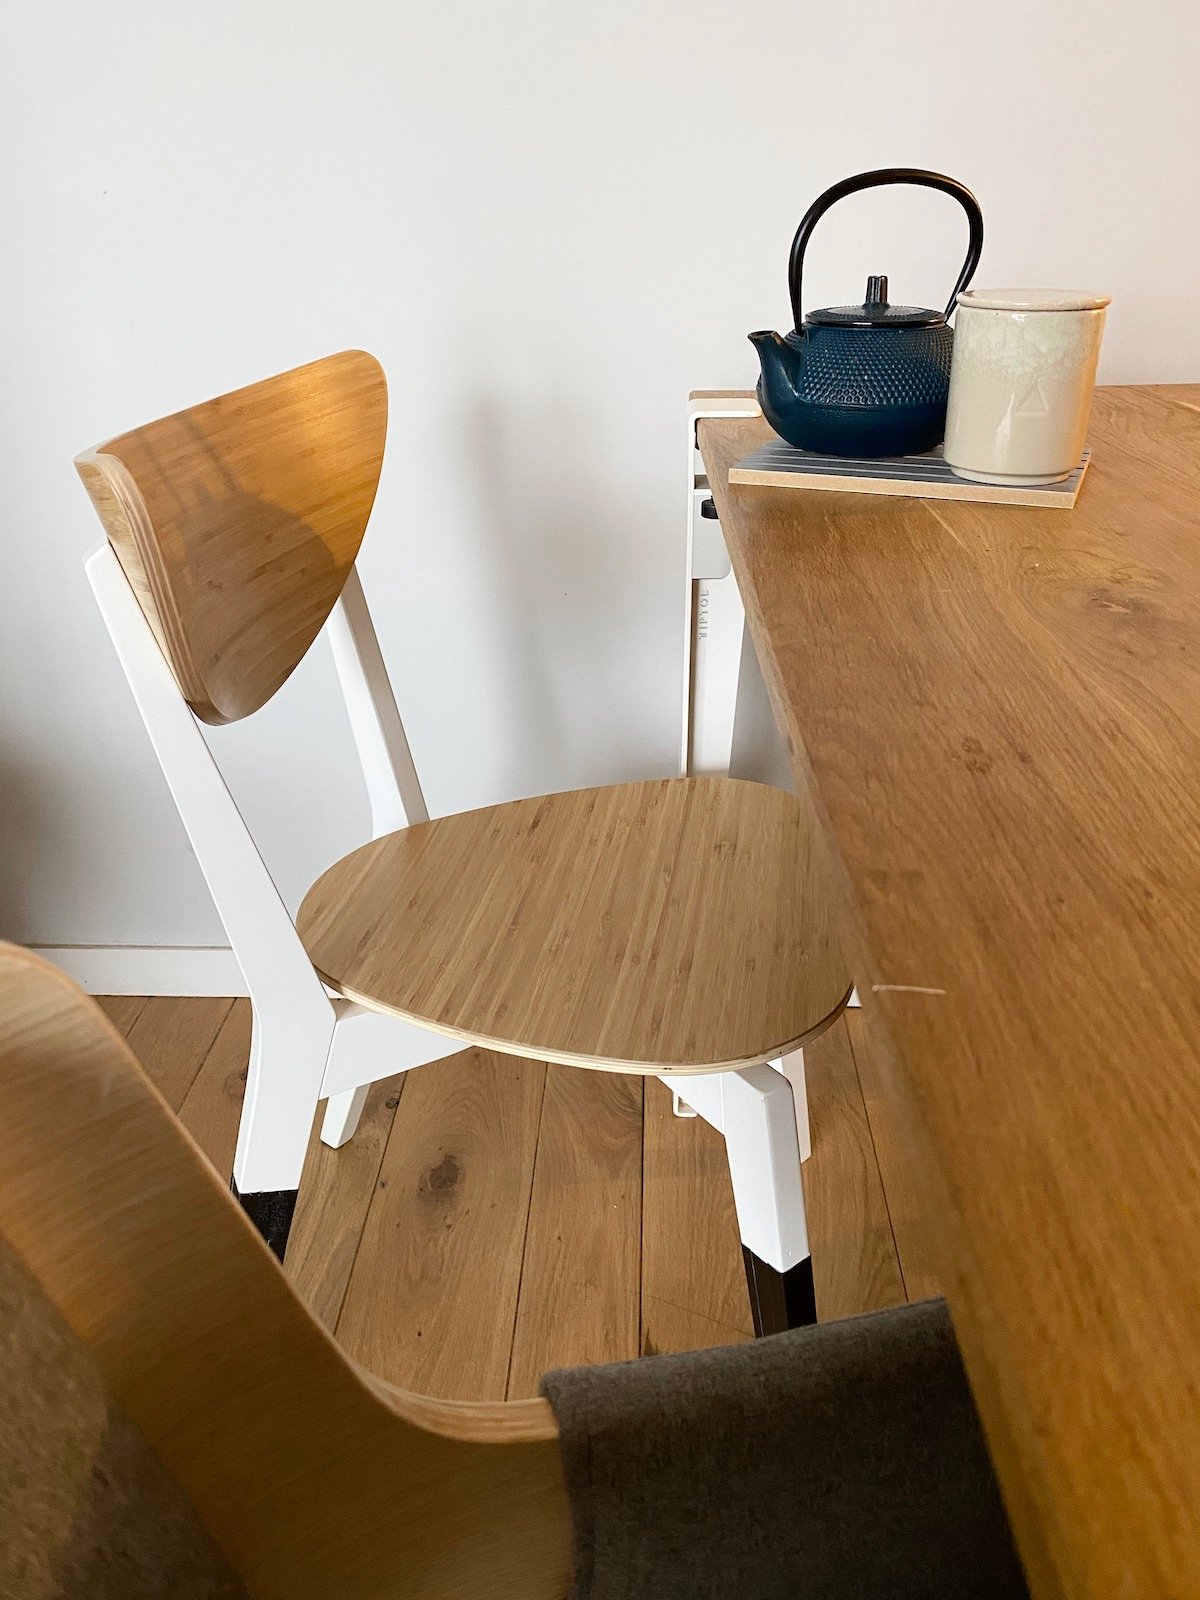 salle à manger bois chêne massif table pied blanc tiptoe chaise